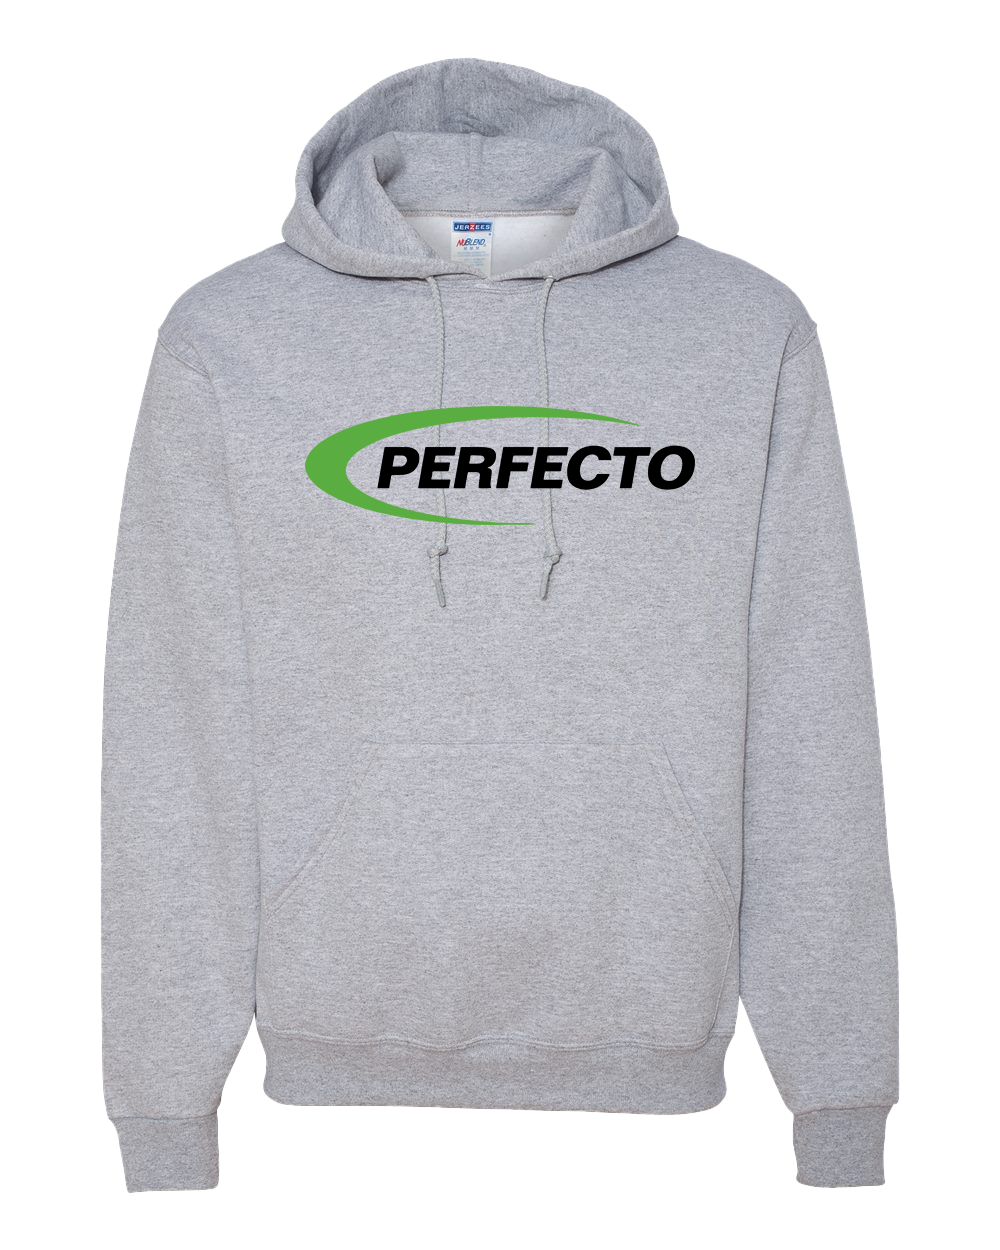 Perfecto Hooded Sweatshirt - Athletic Heather